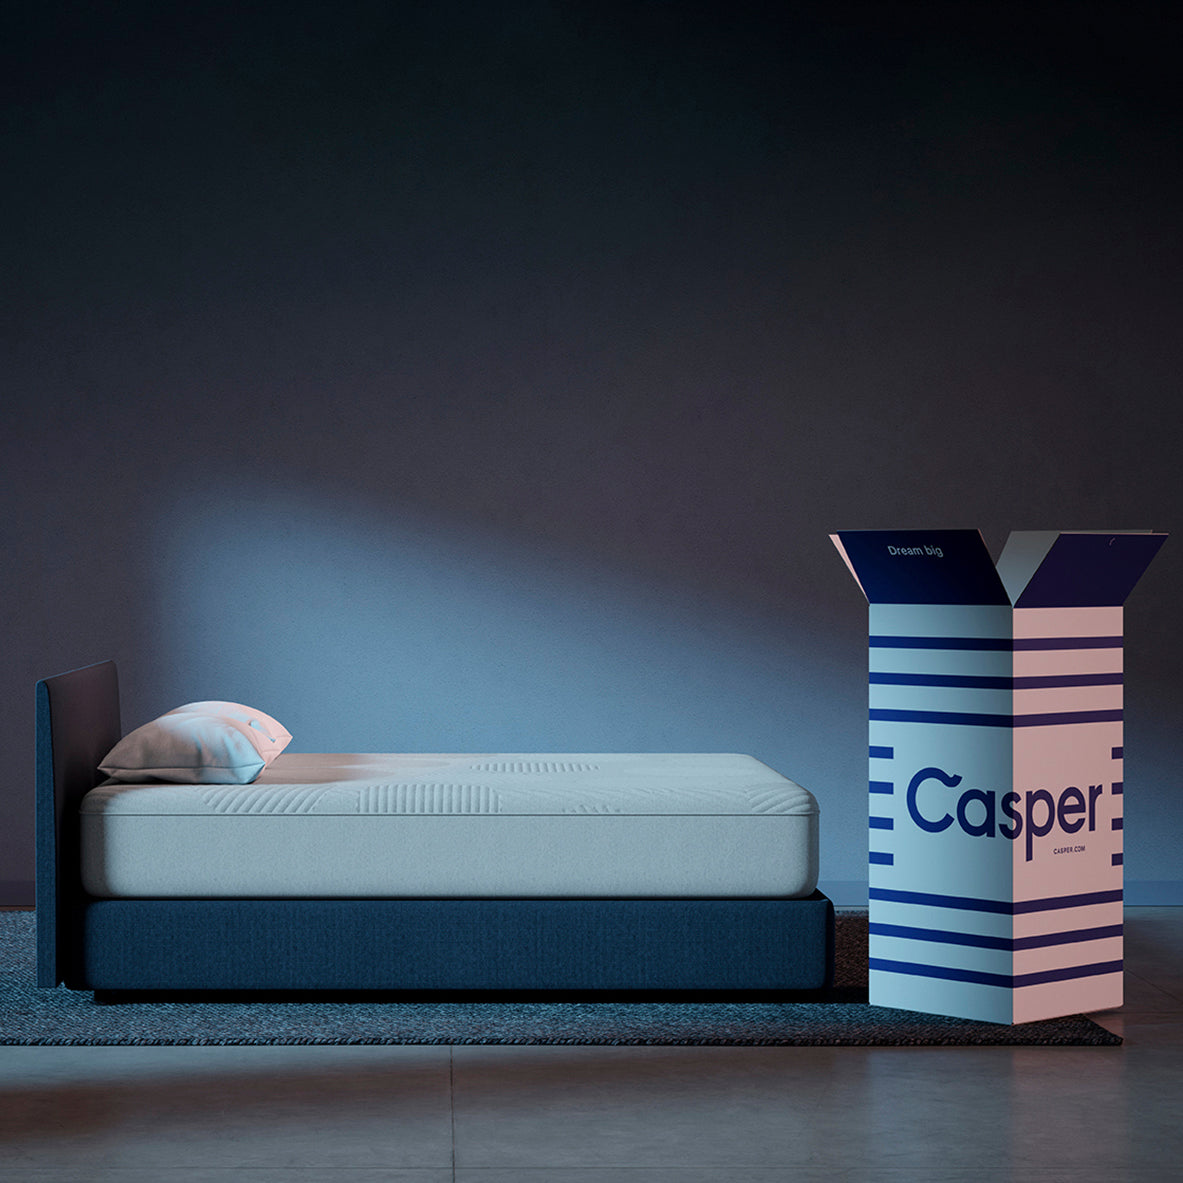 Casper Nova Hybrid Snow Mattress On Bed In Bedroom With Box Packaging